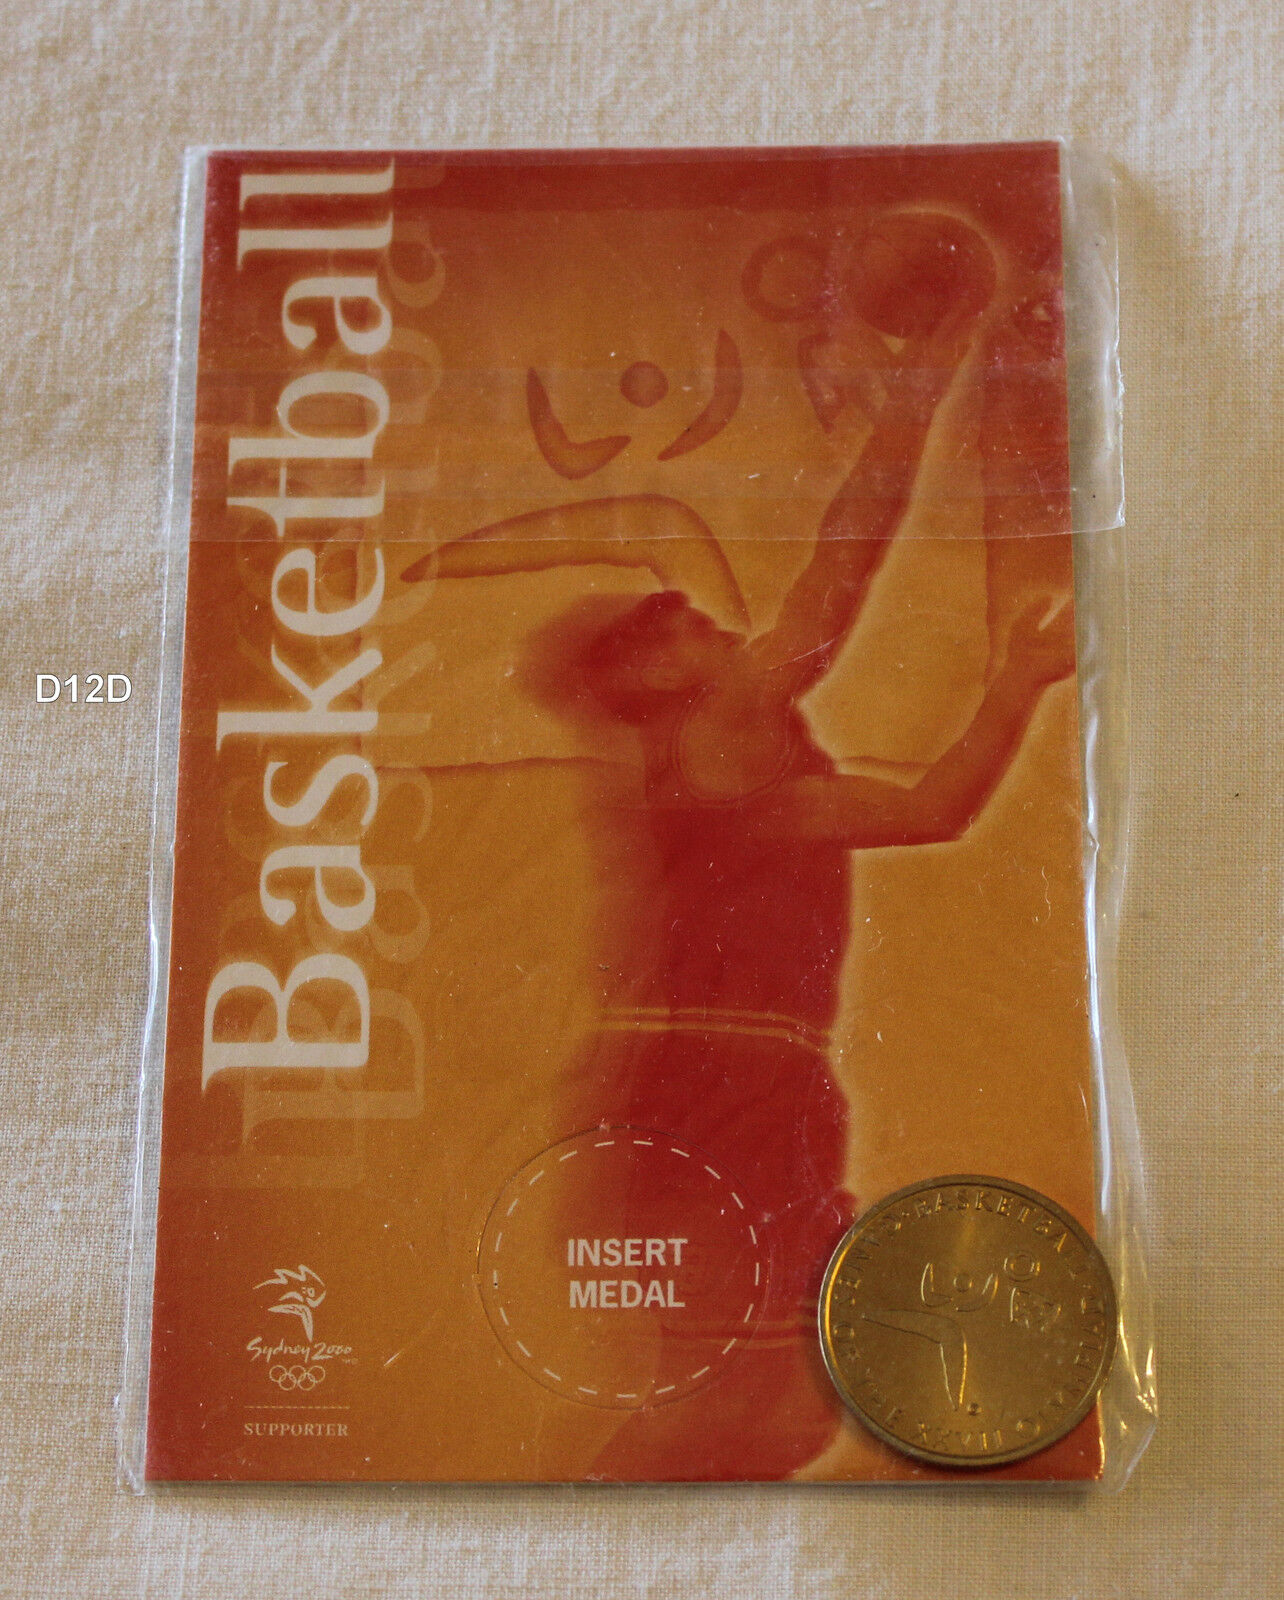 Basketball Sydney 2000 Olympic Games Shell Commemorative Medallion New